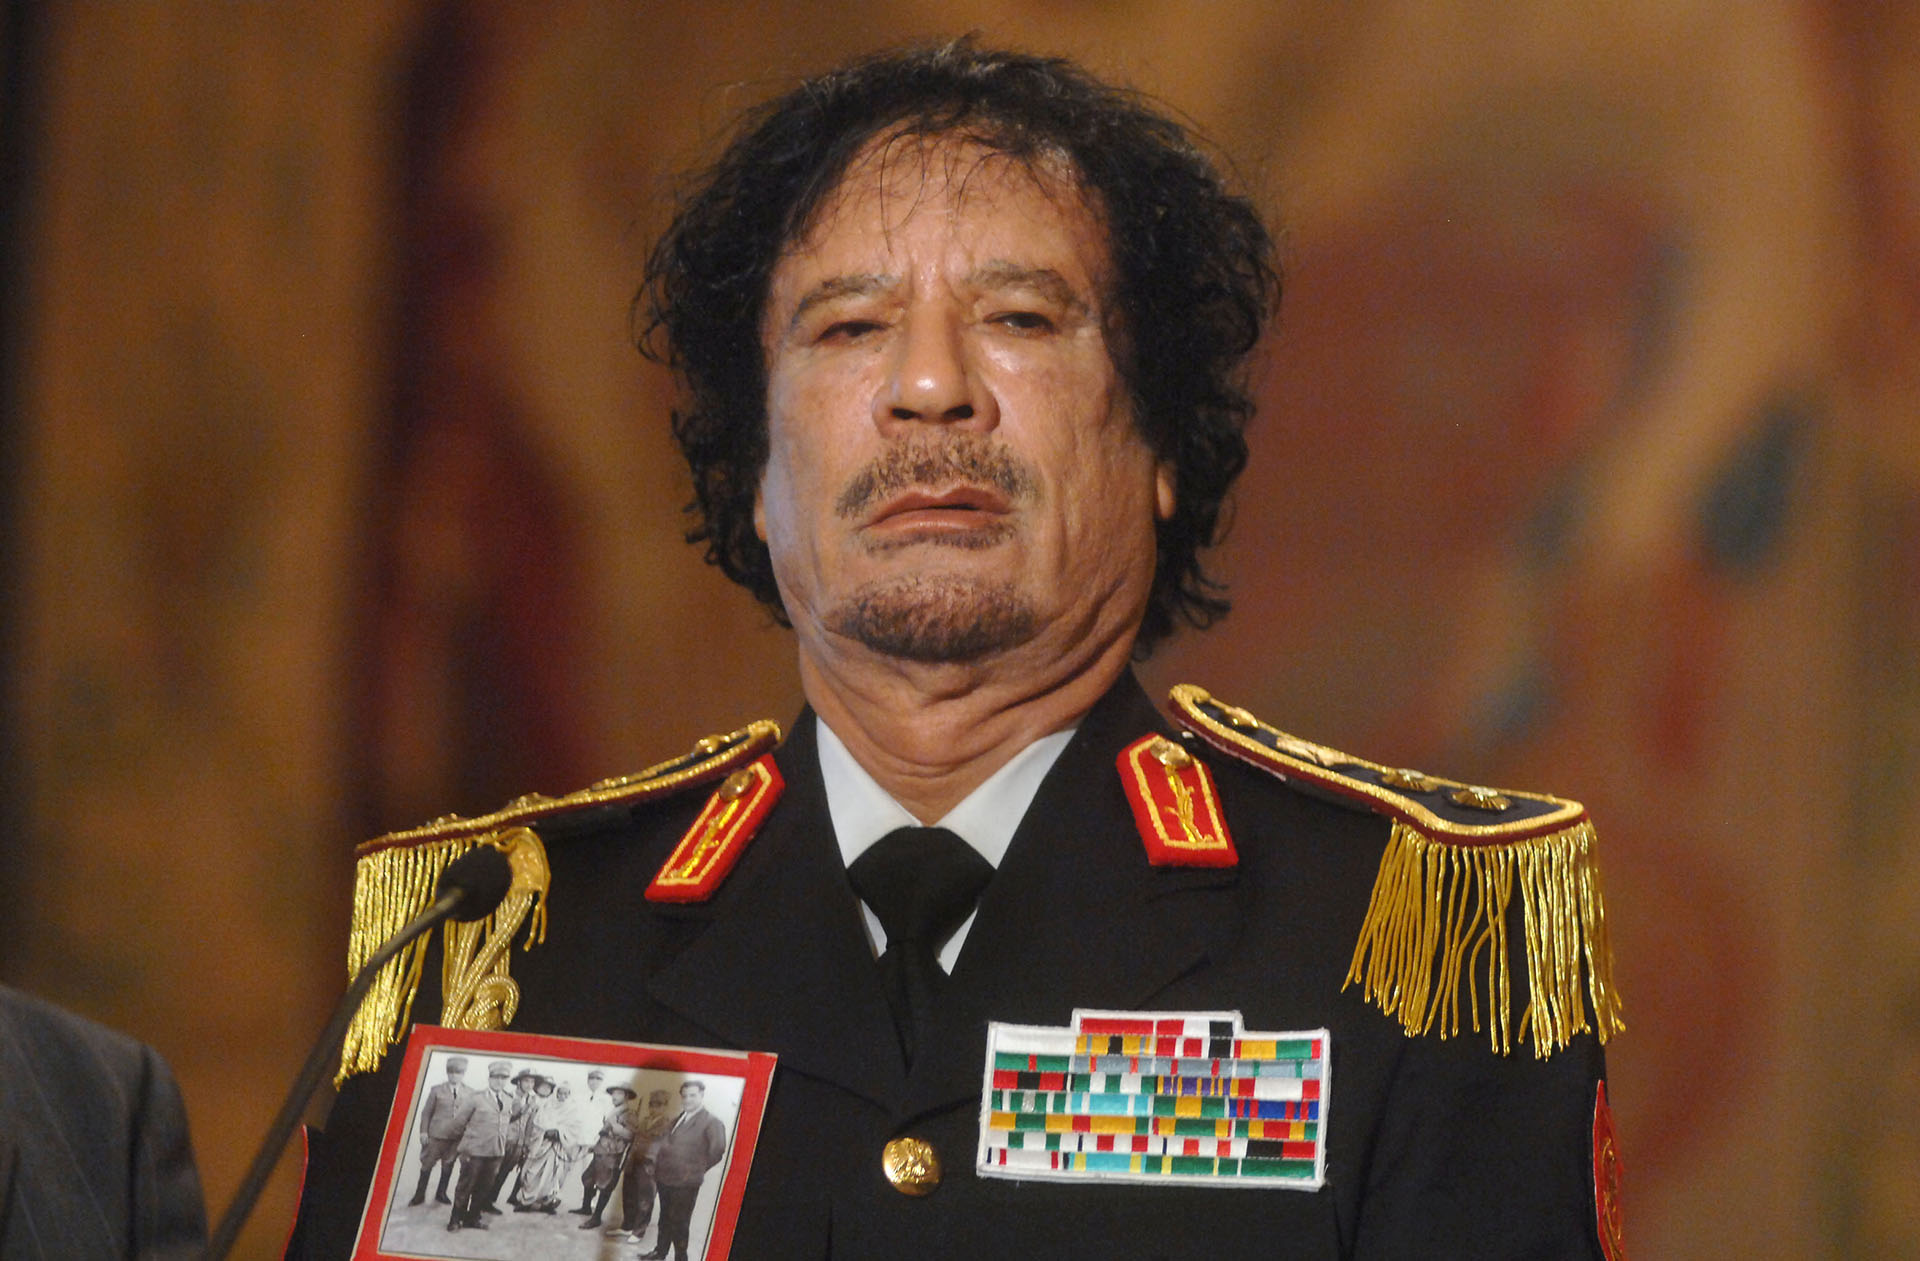 Muammar Gaddafi (Mandatory Credit: Photo by Agf/Shutterstock)